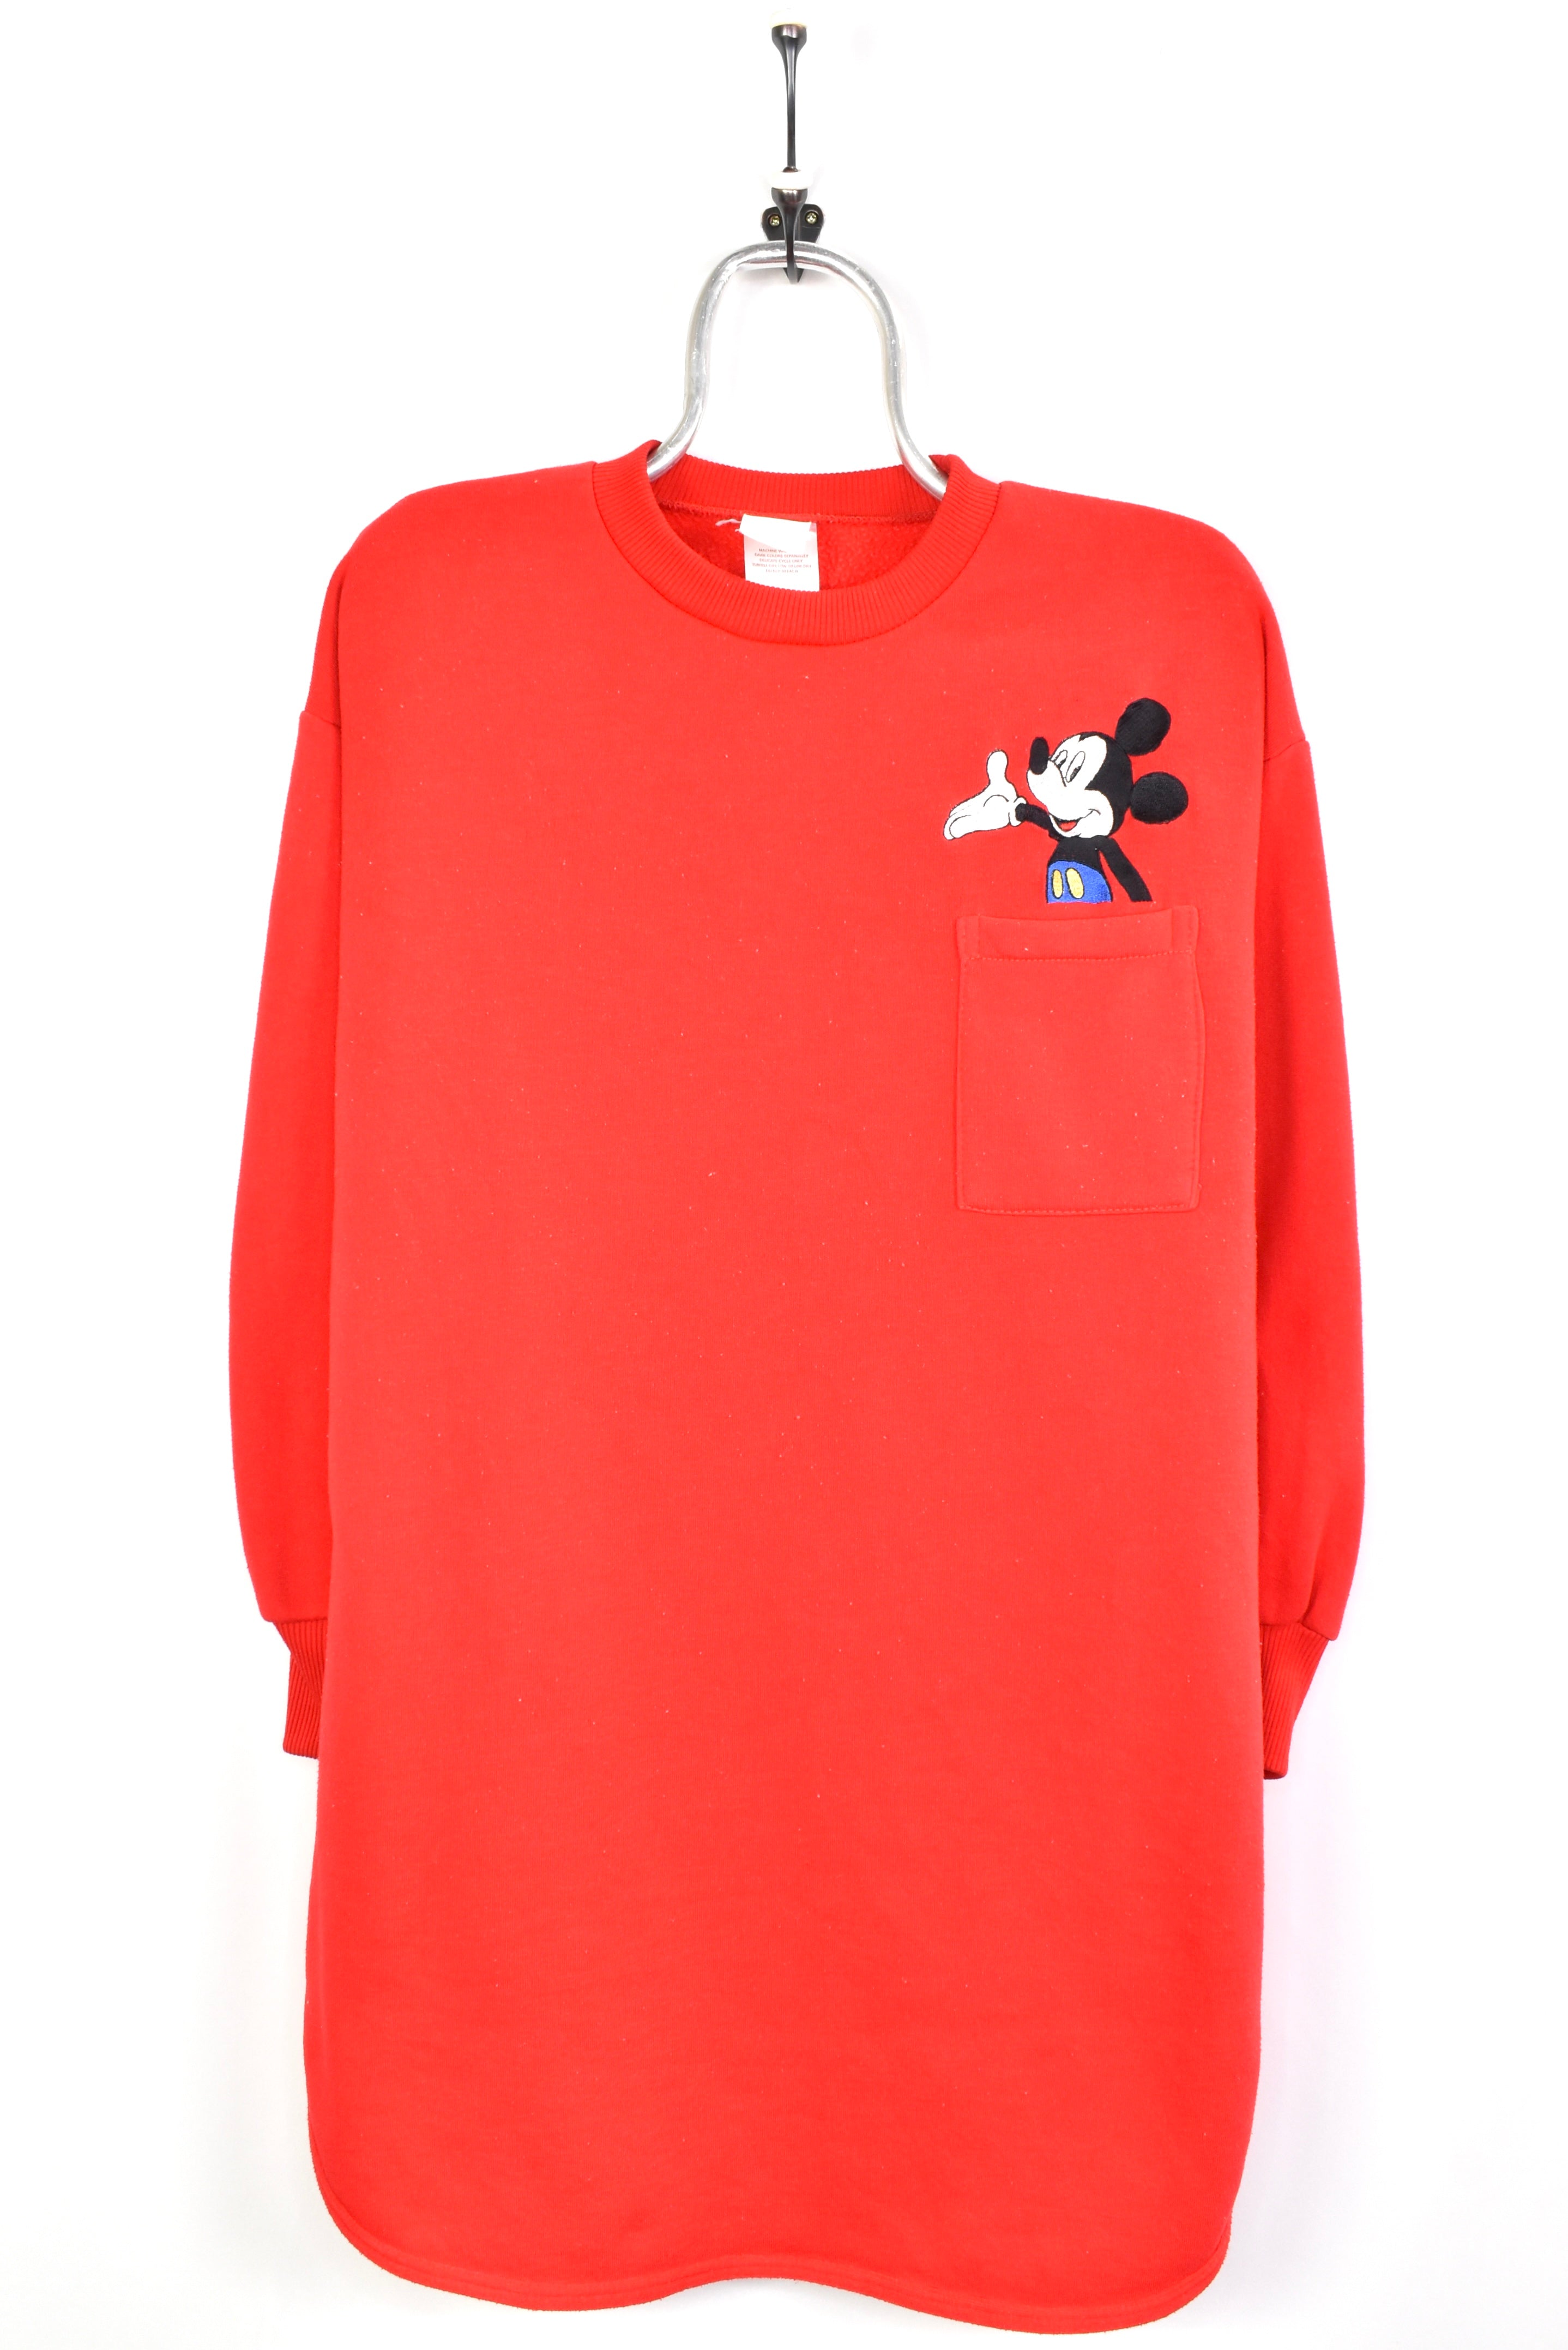 Modern Mickey Mouse sweatshirt, Disney red embroidered crewneck - AU L DISNEY / CARTOON